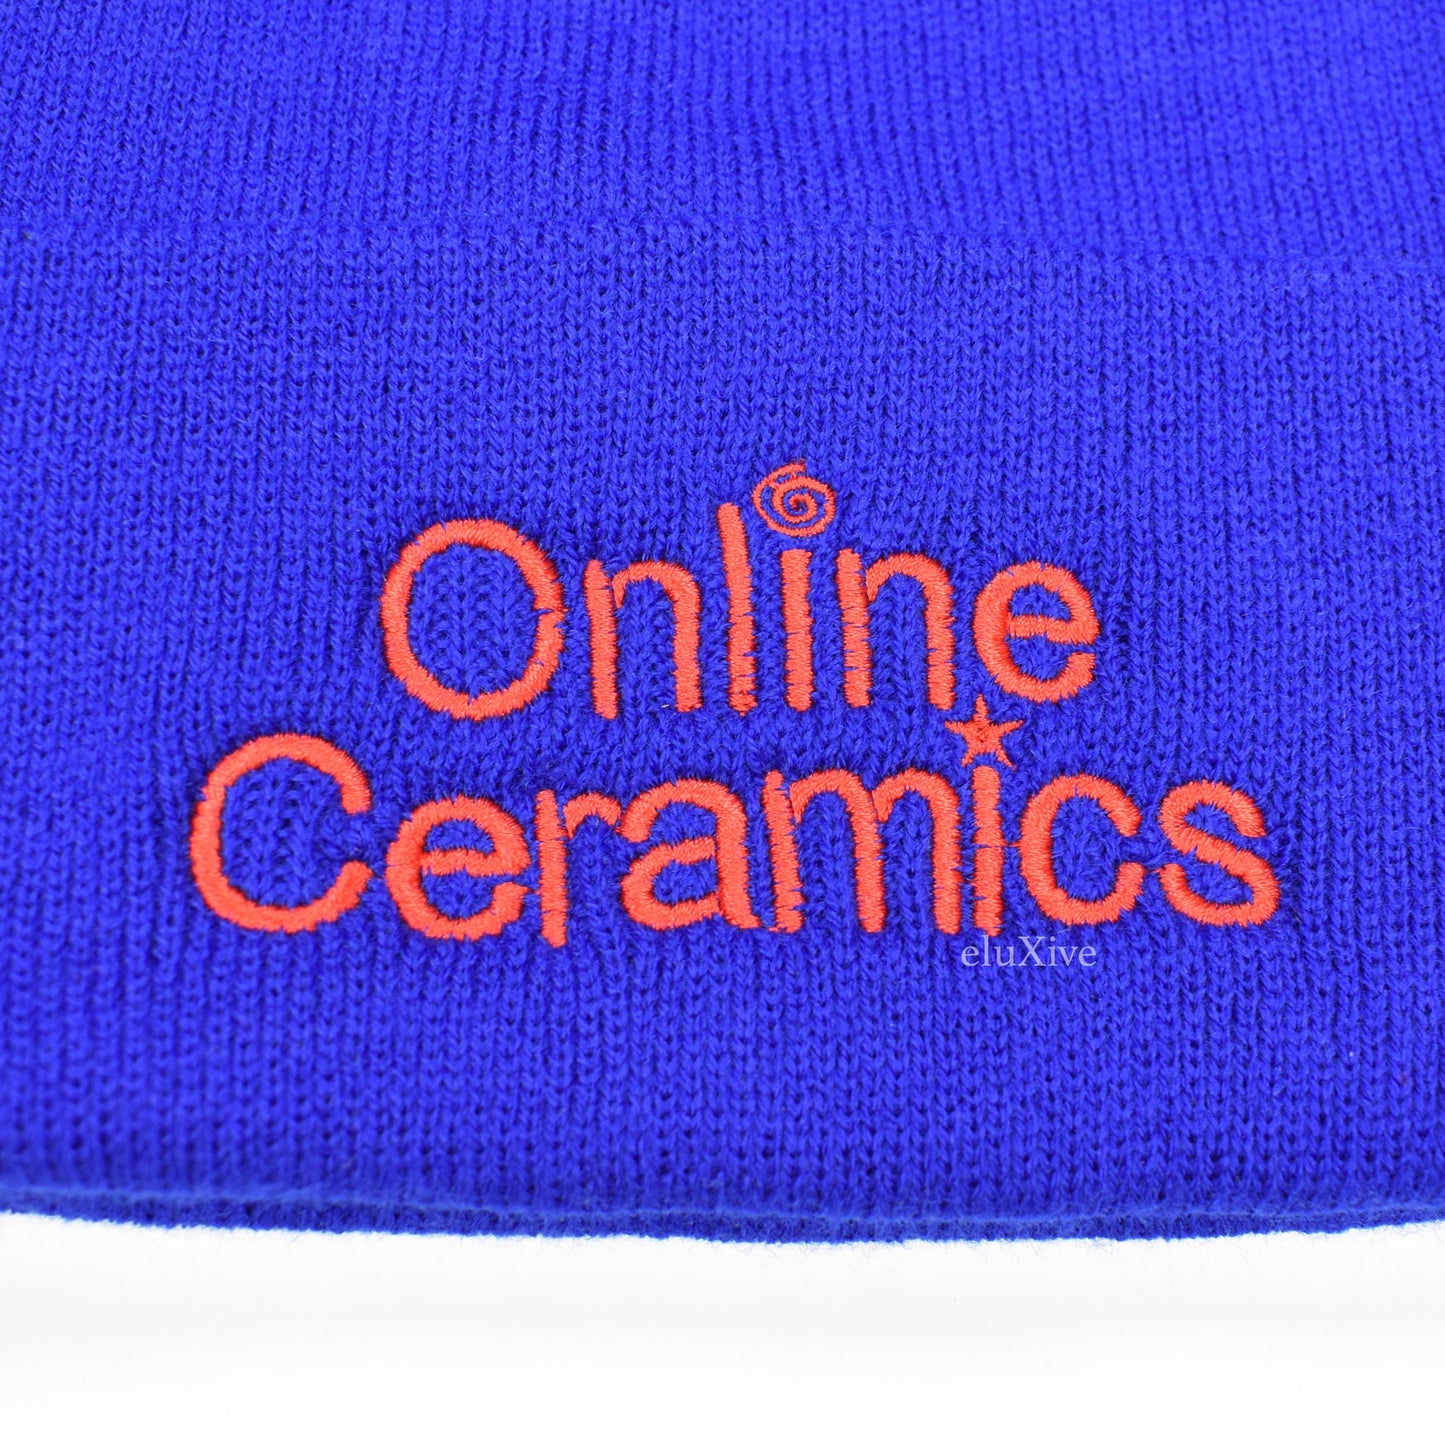 Online Ceramics - Logo Embroidered Beanie (Blue)